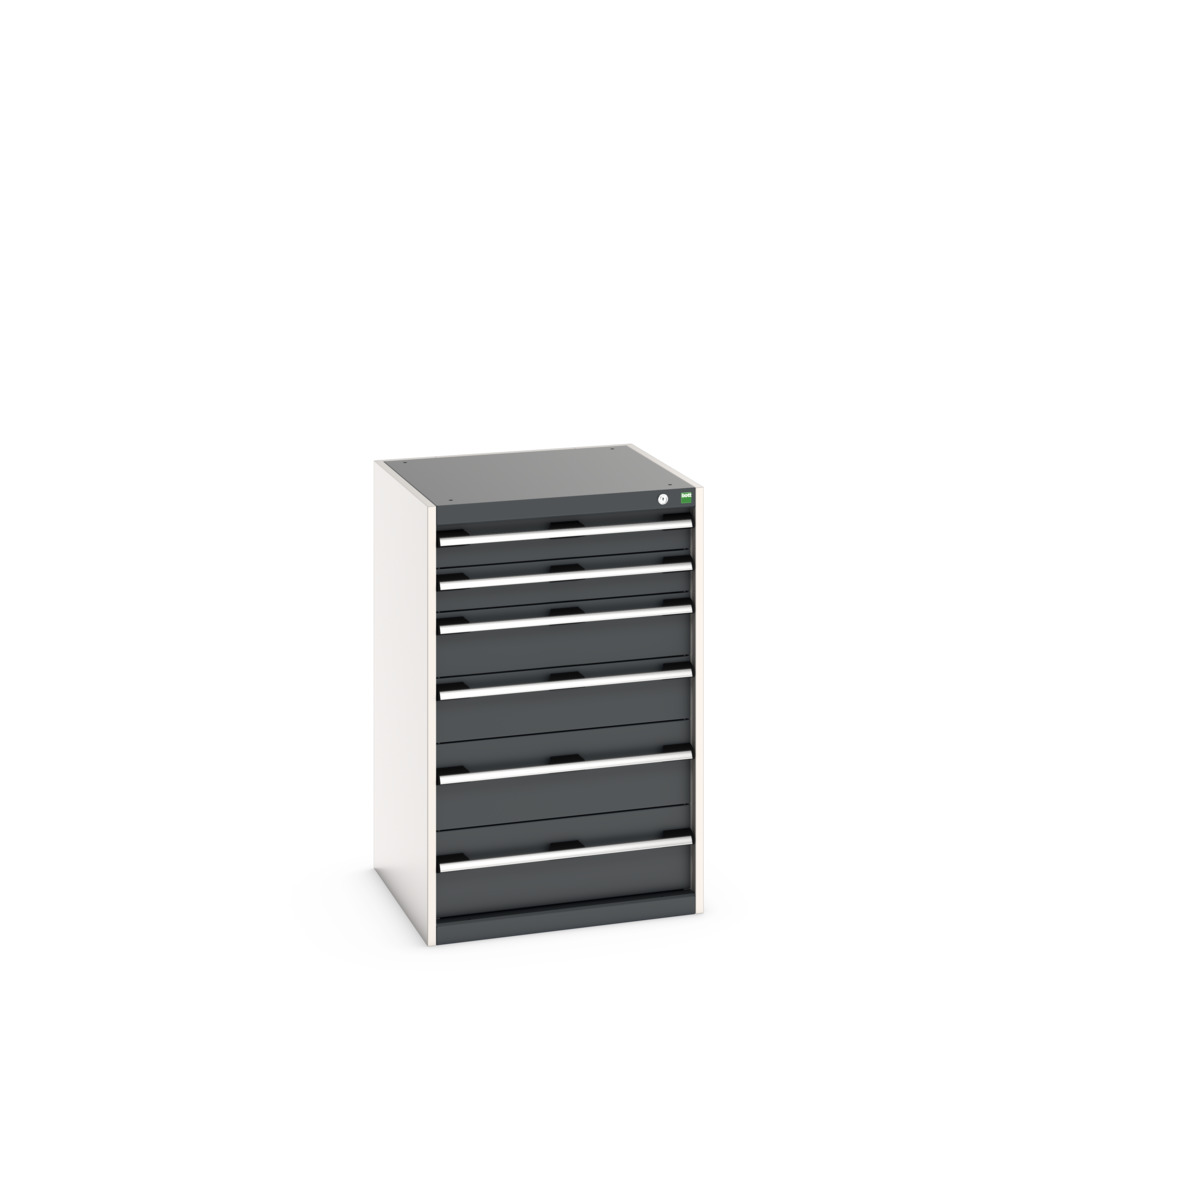 40019059. - cubio drawer cabinet